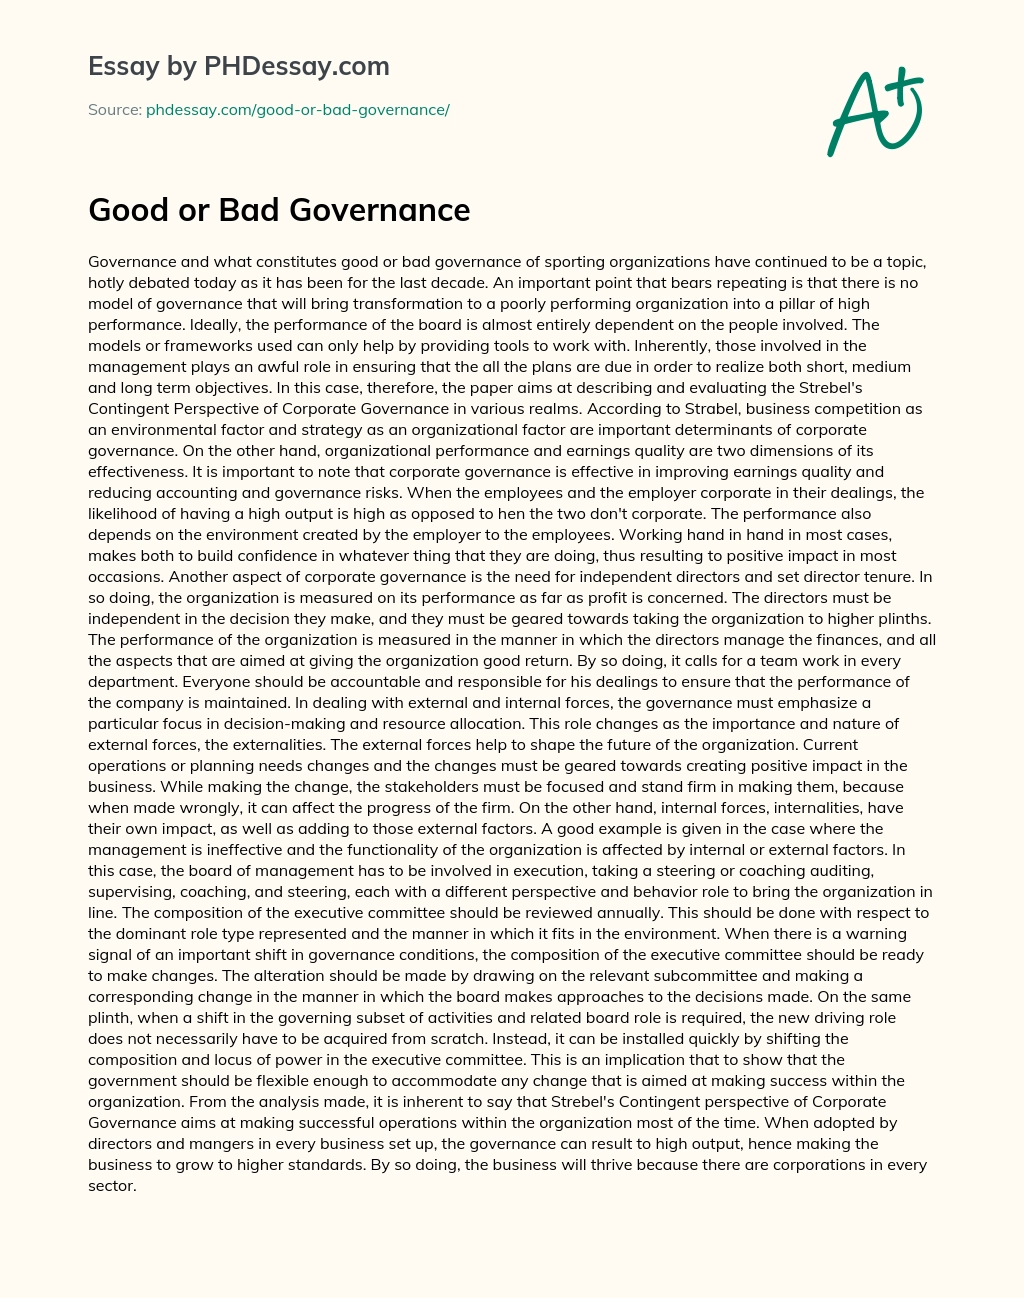 good governance and bad governance essay